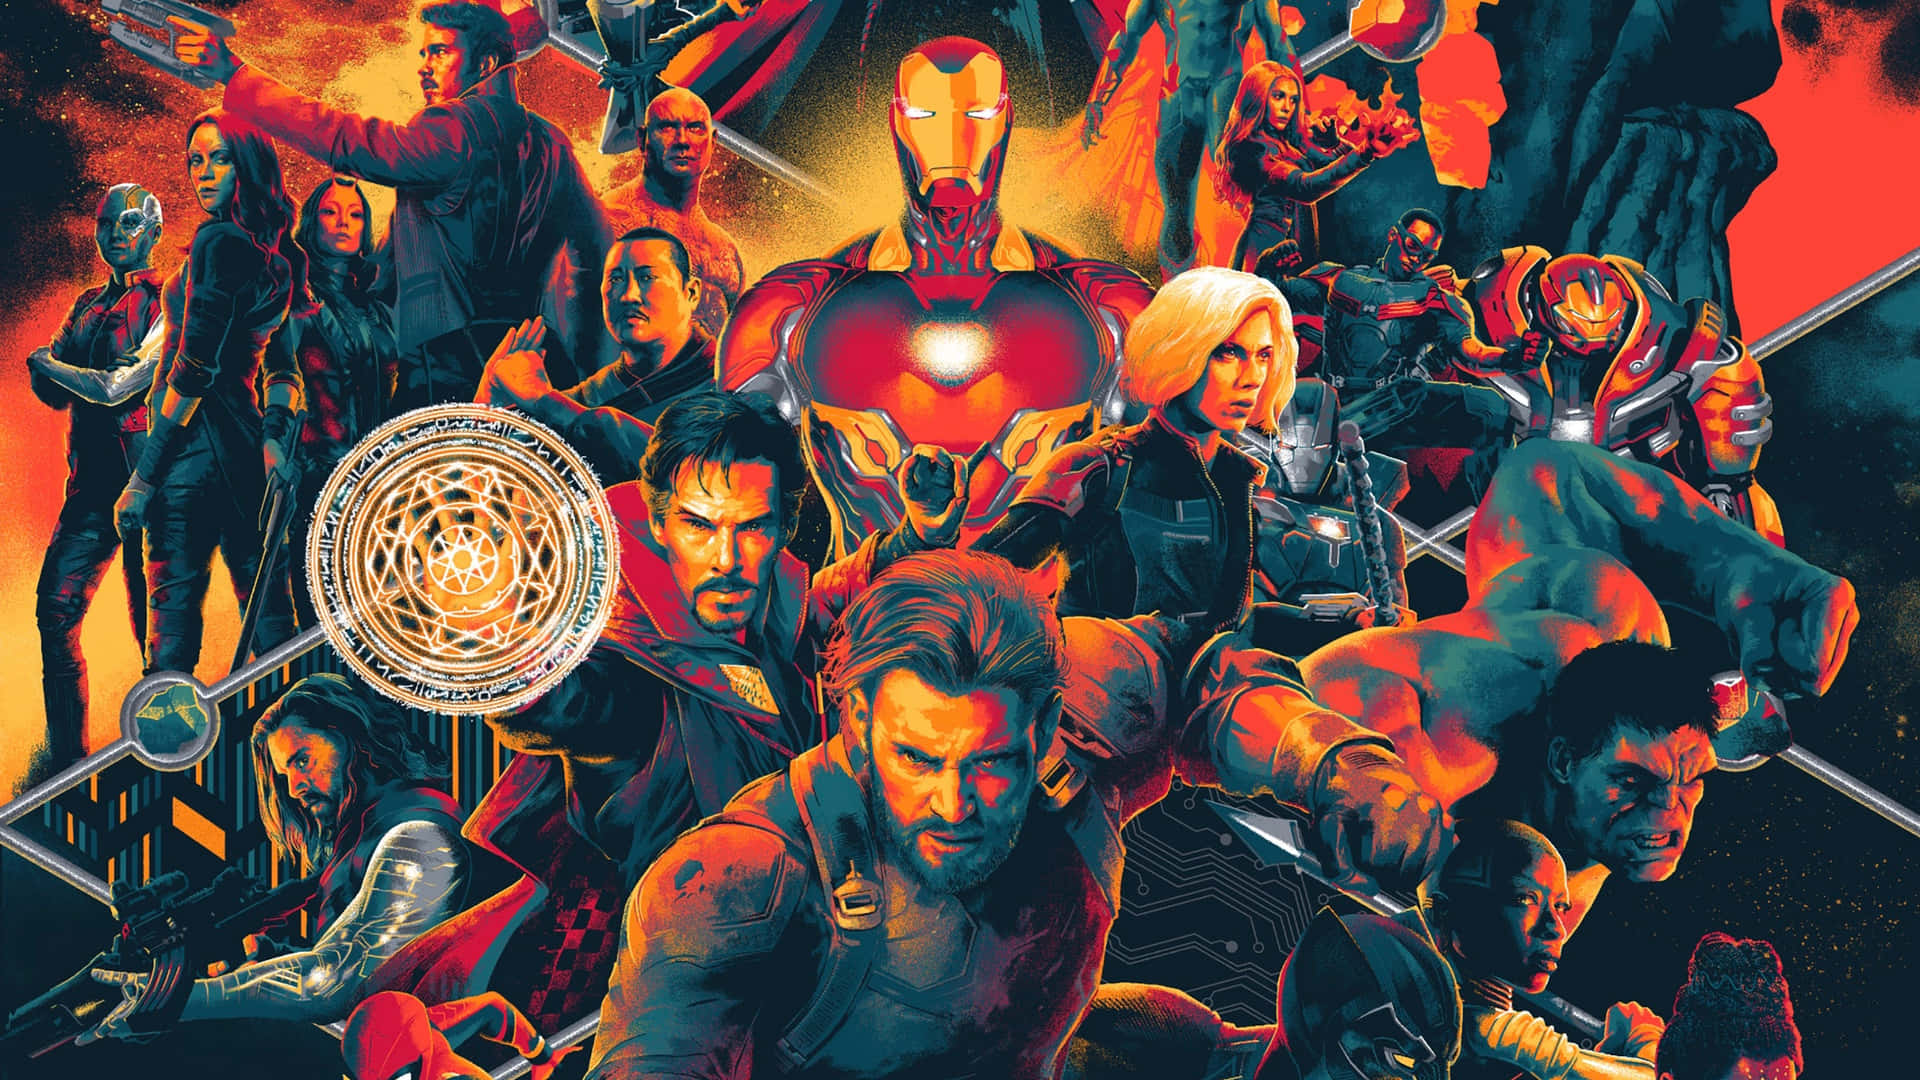 Avengers: Infinity War – “avengers Assemble!” Background